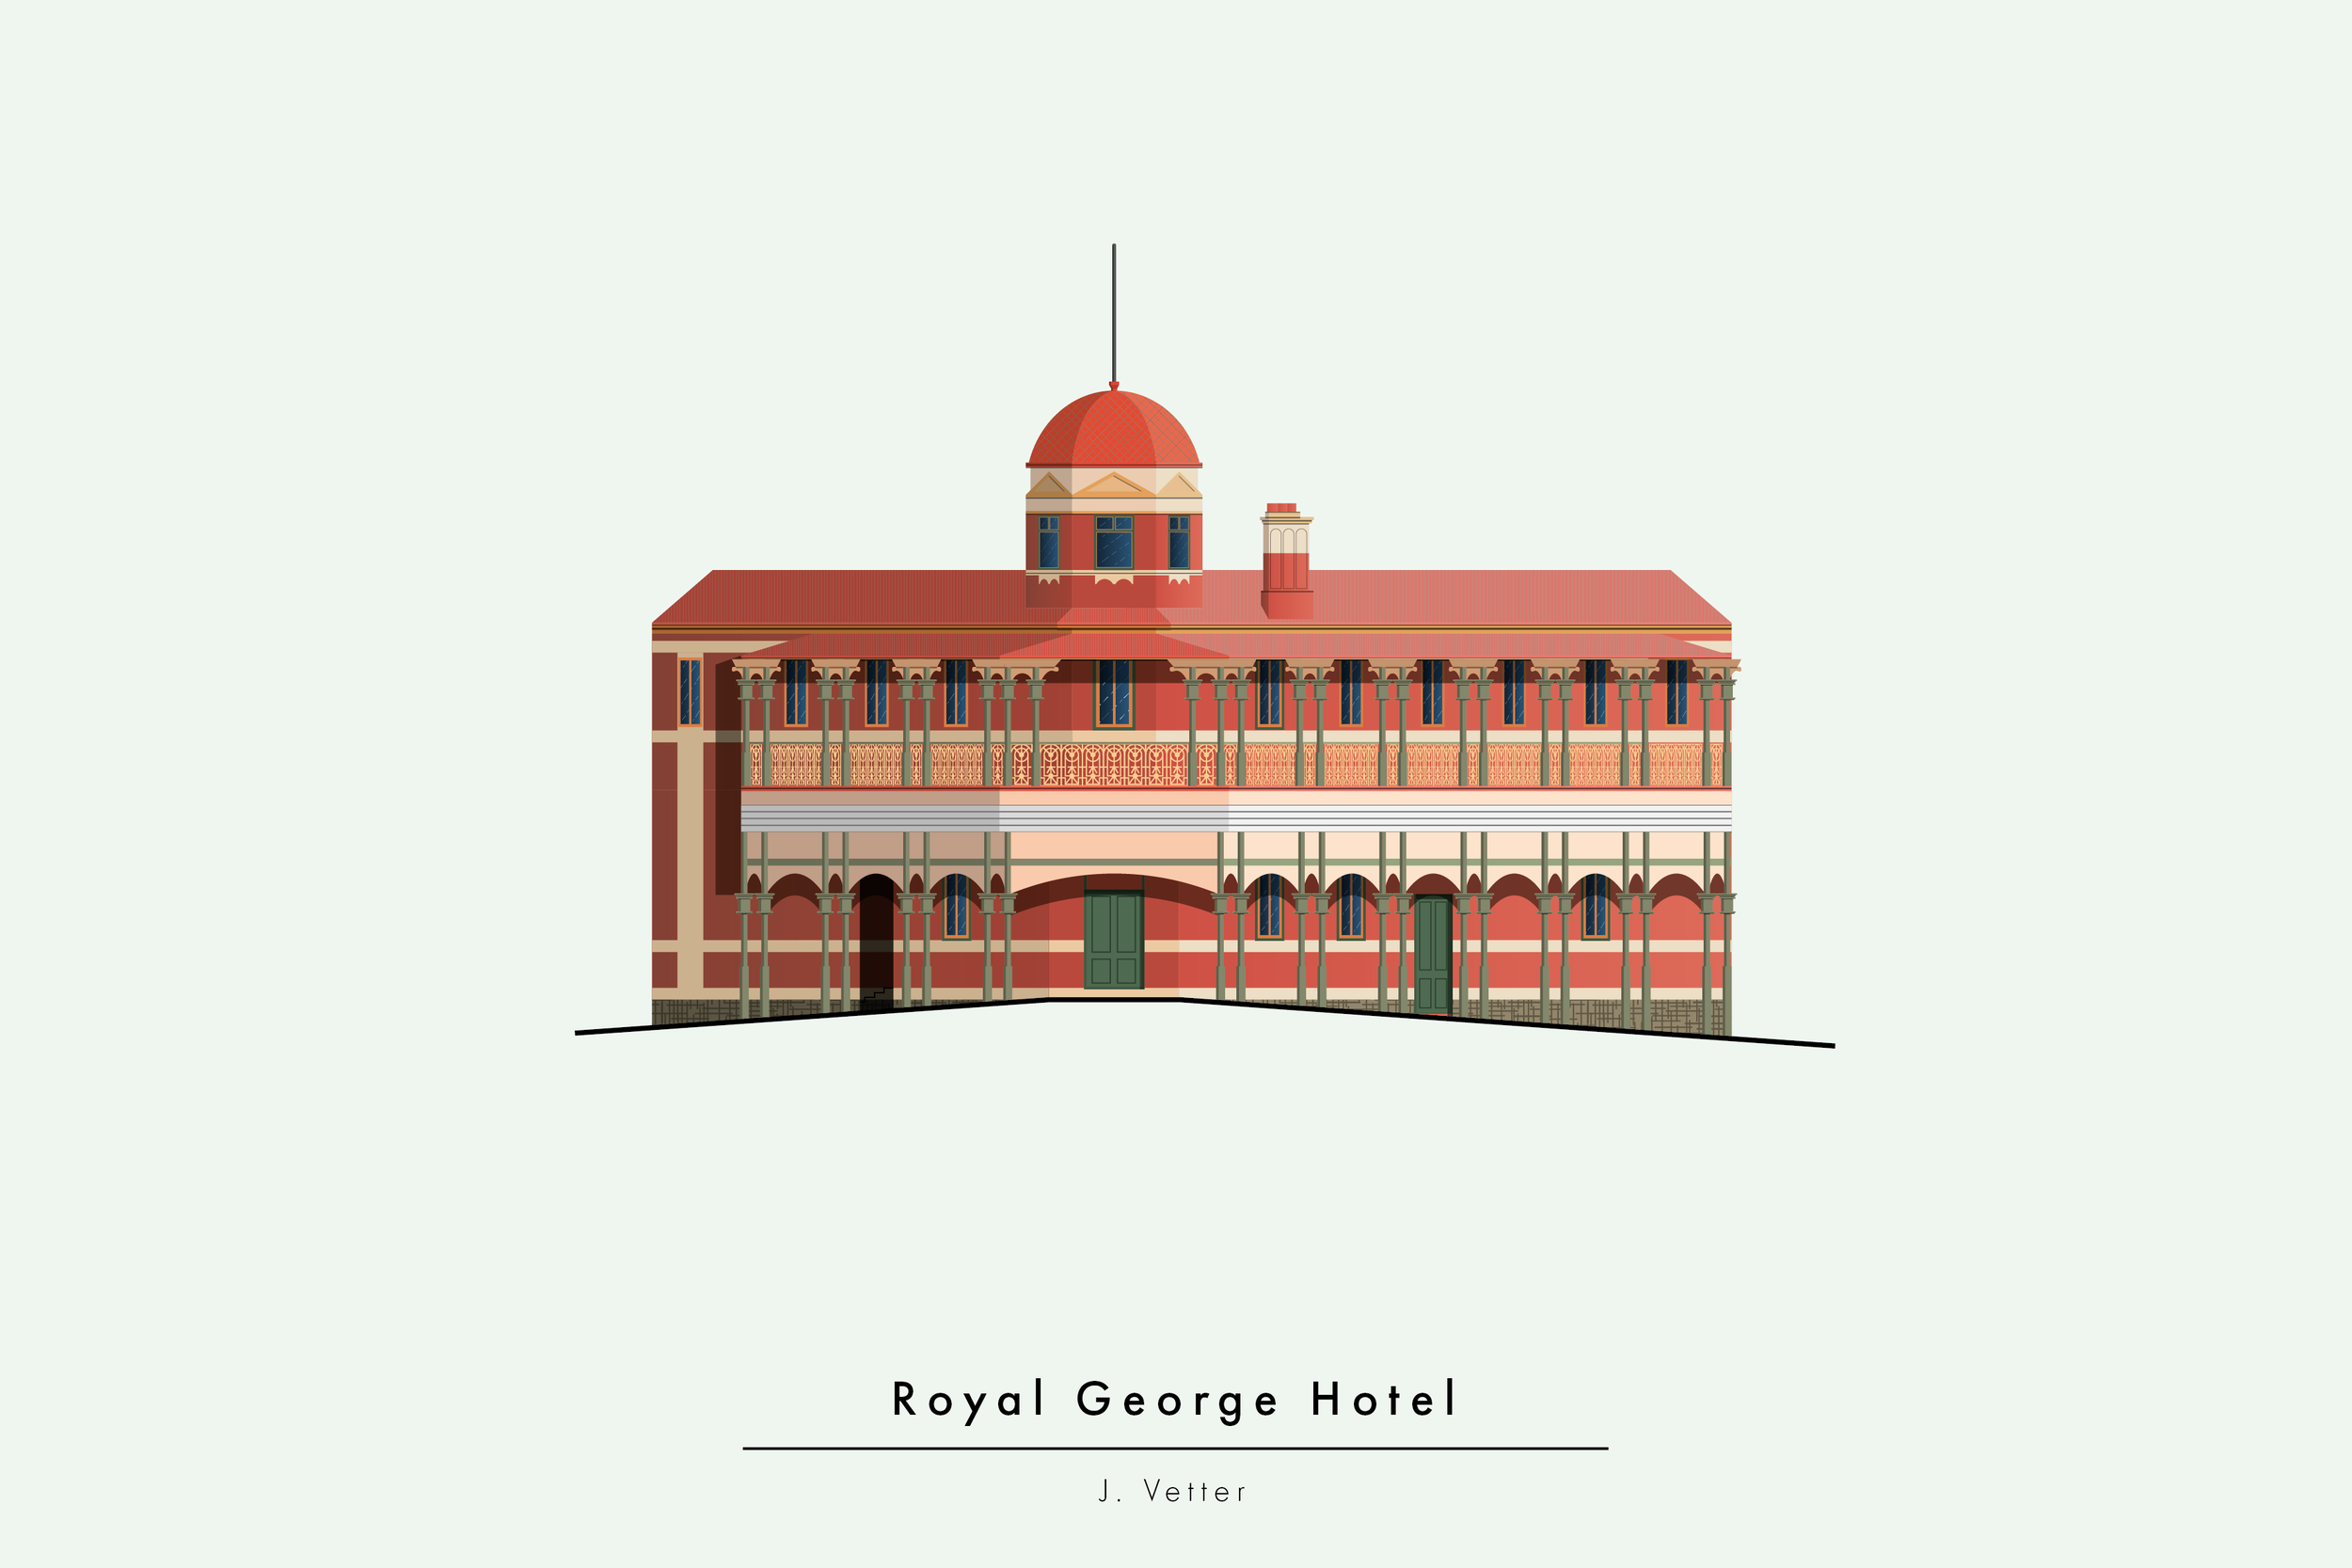 Built - Royal George Hotel